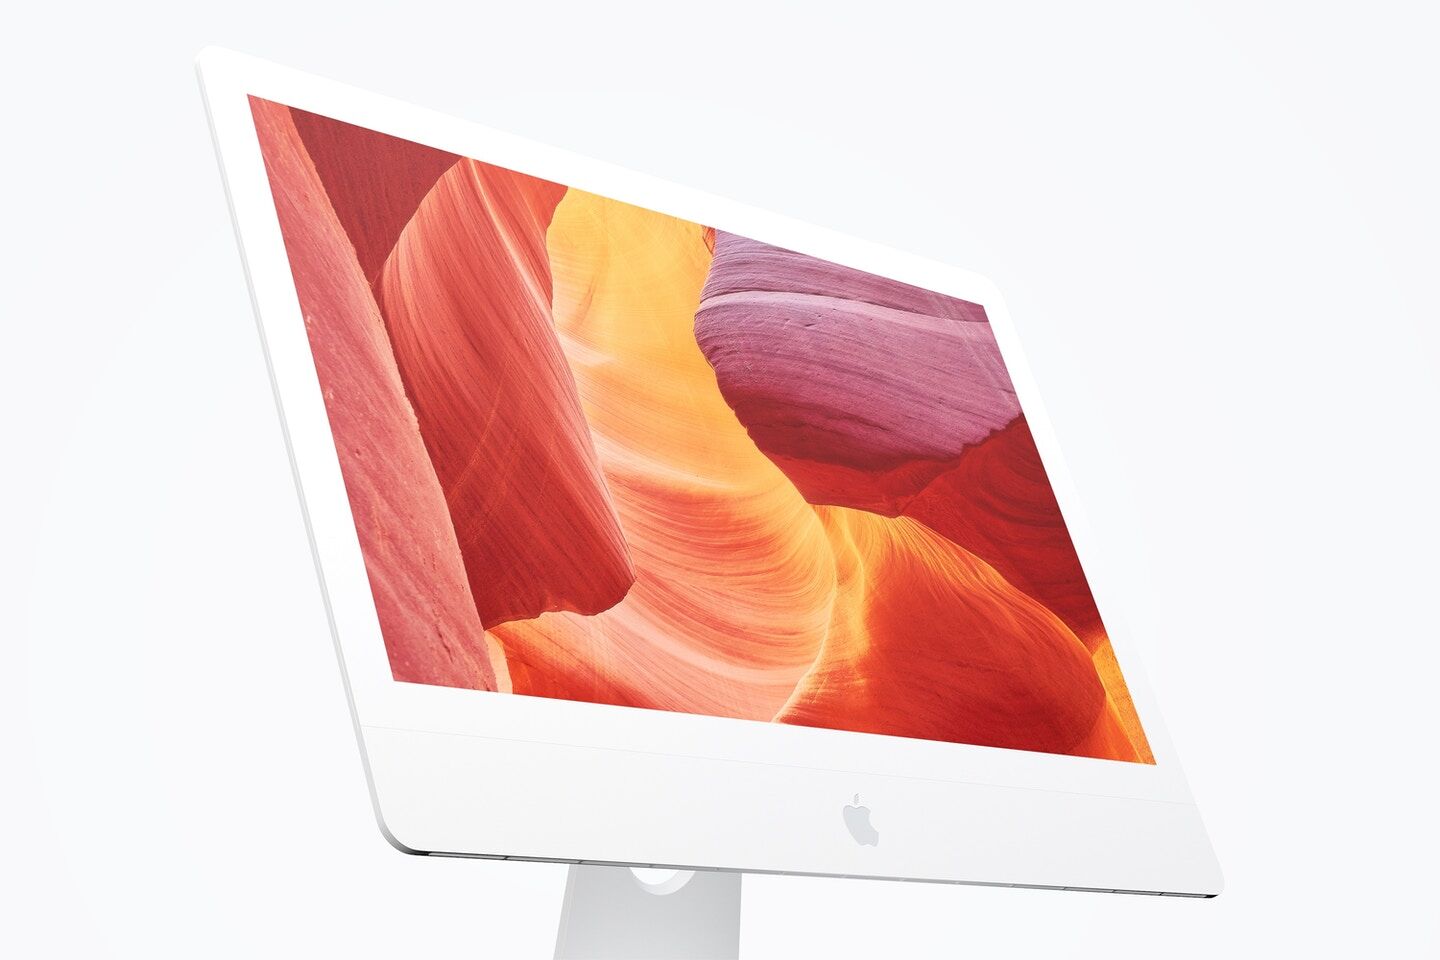 Mockup Showcasing Close-up Side View of iMac 27" FREE PSD